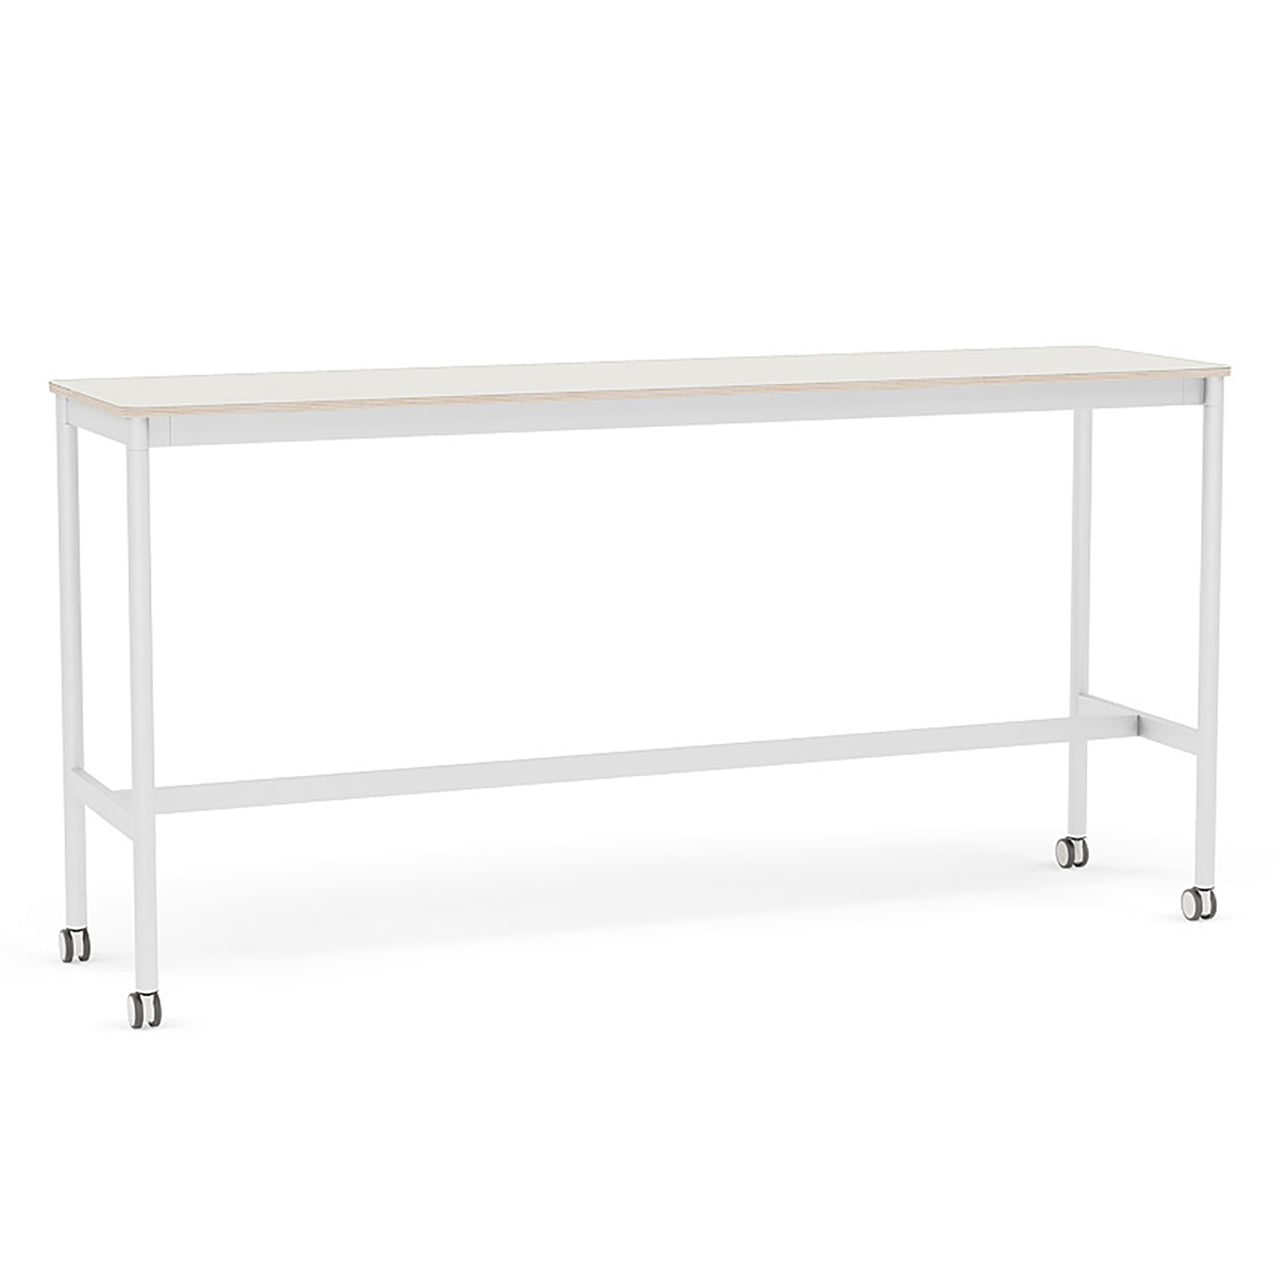 Base High Table with Castors: 190 + White Nanolaminate + Plywood Edge + White